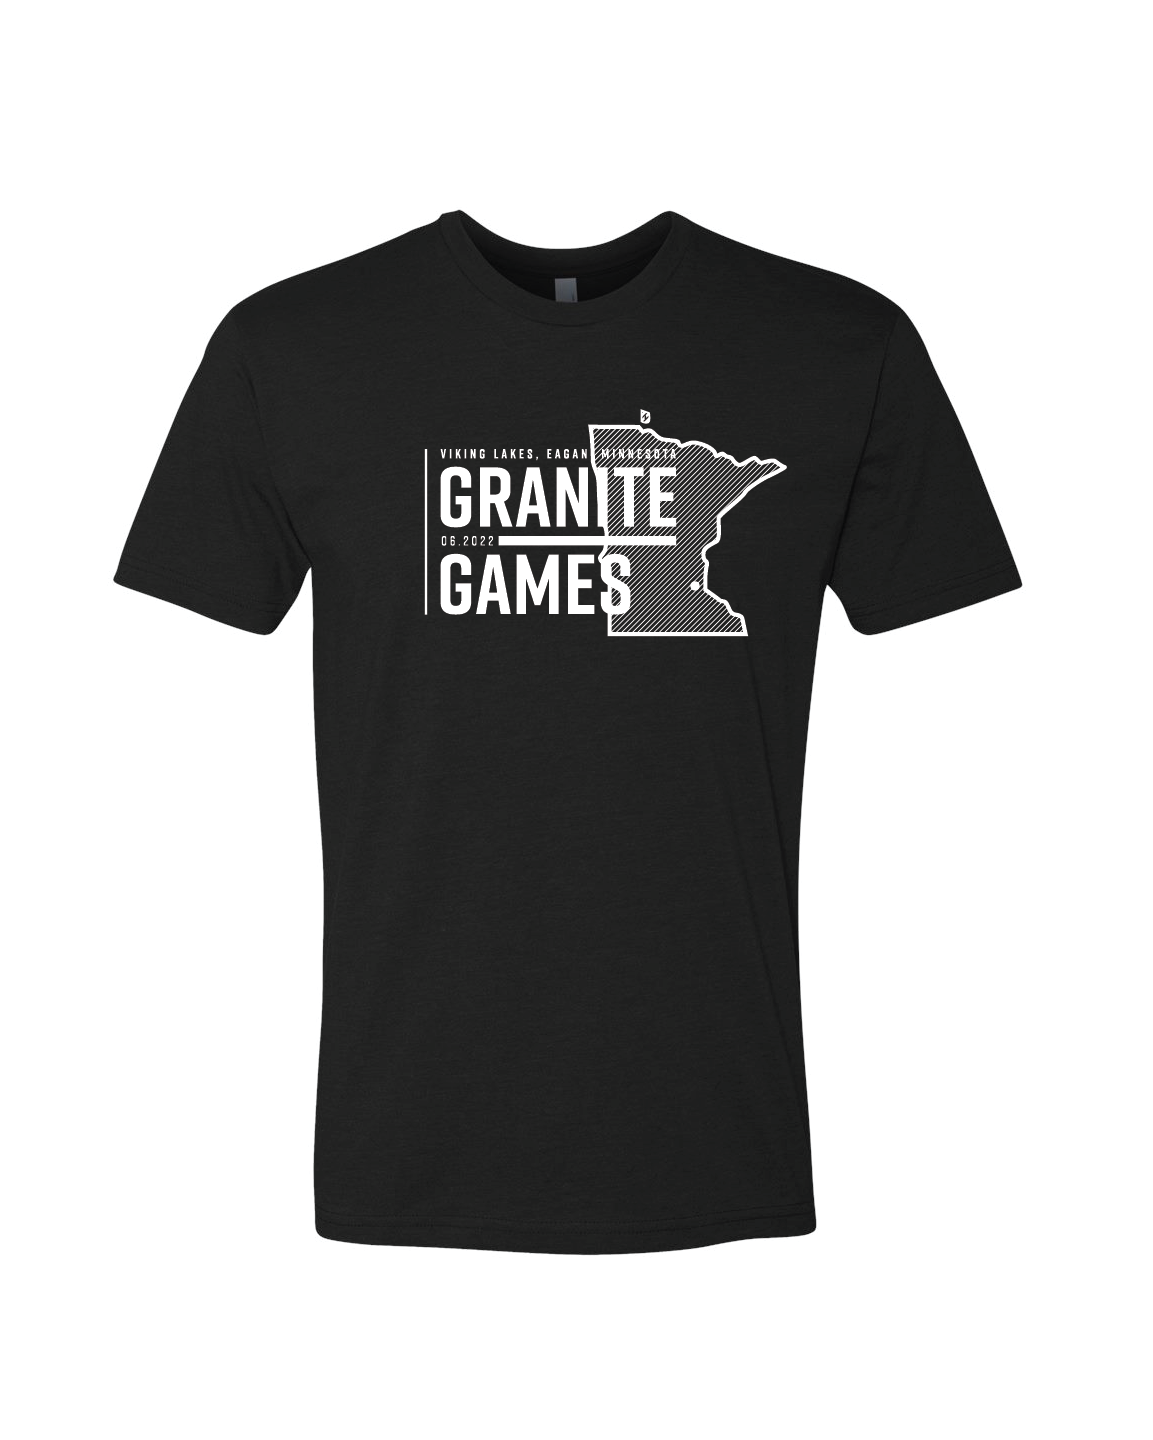 Official Granite Games T-Shirt